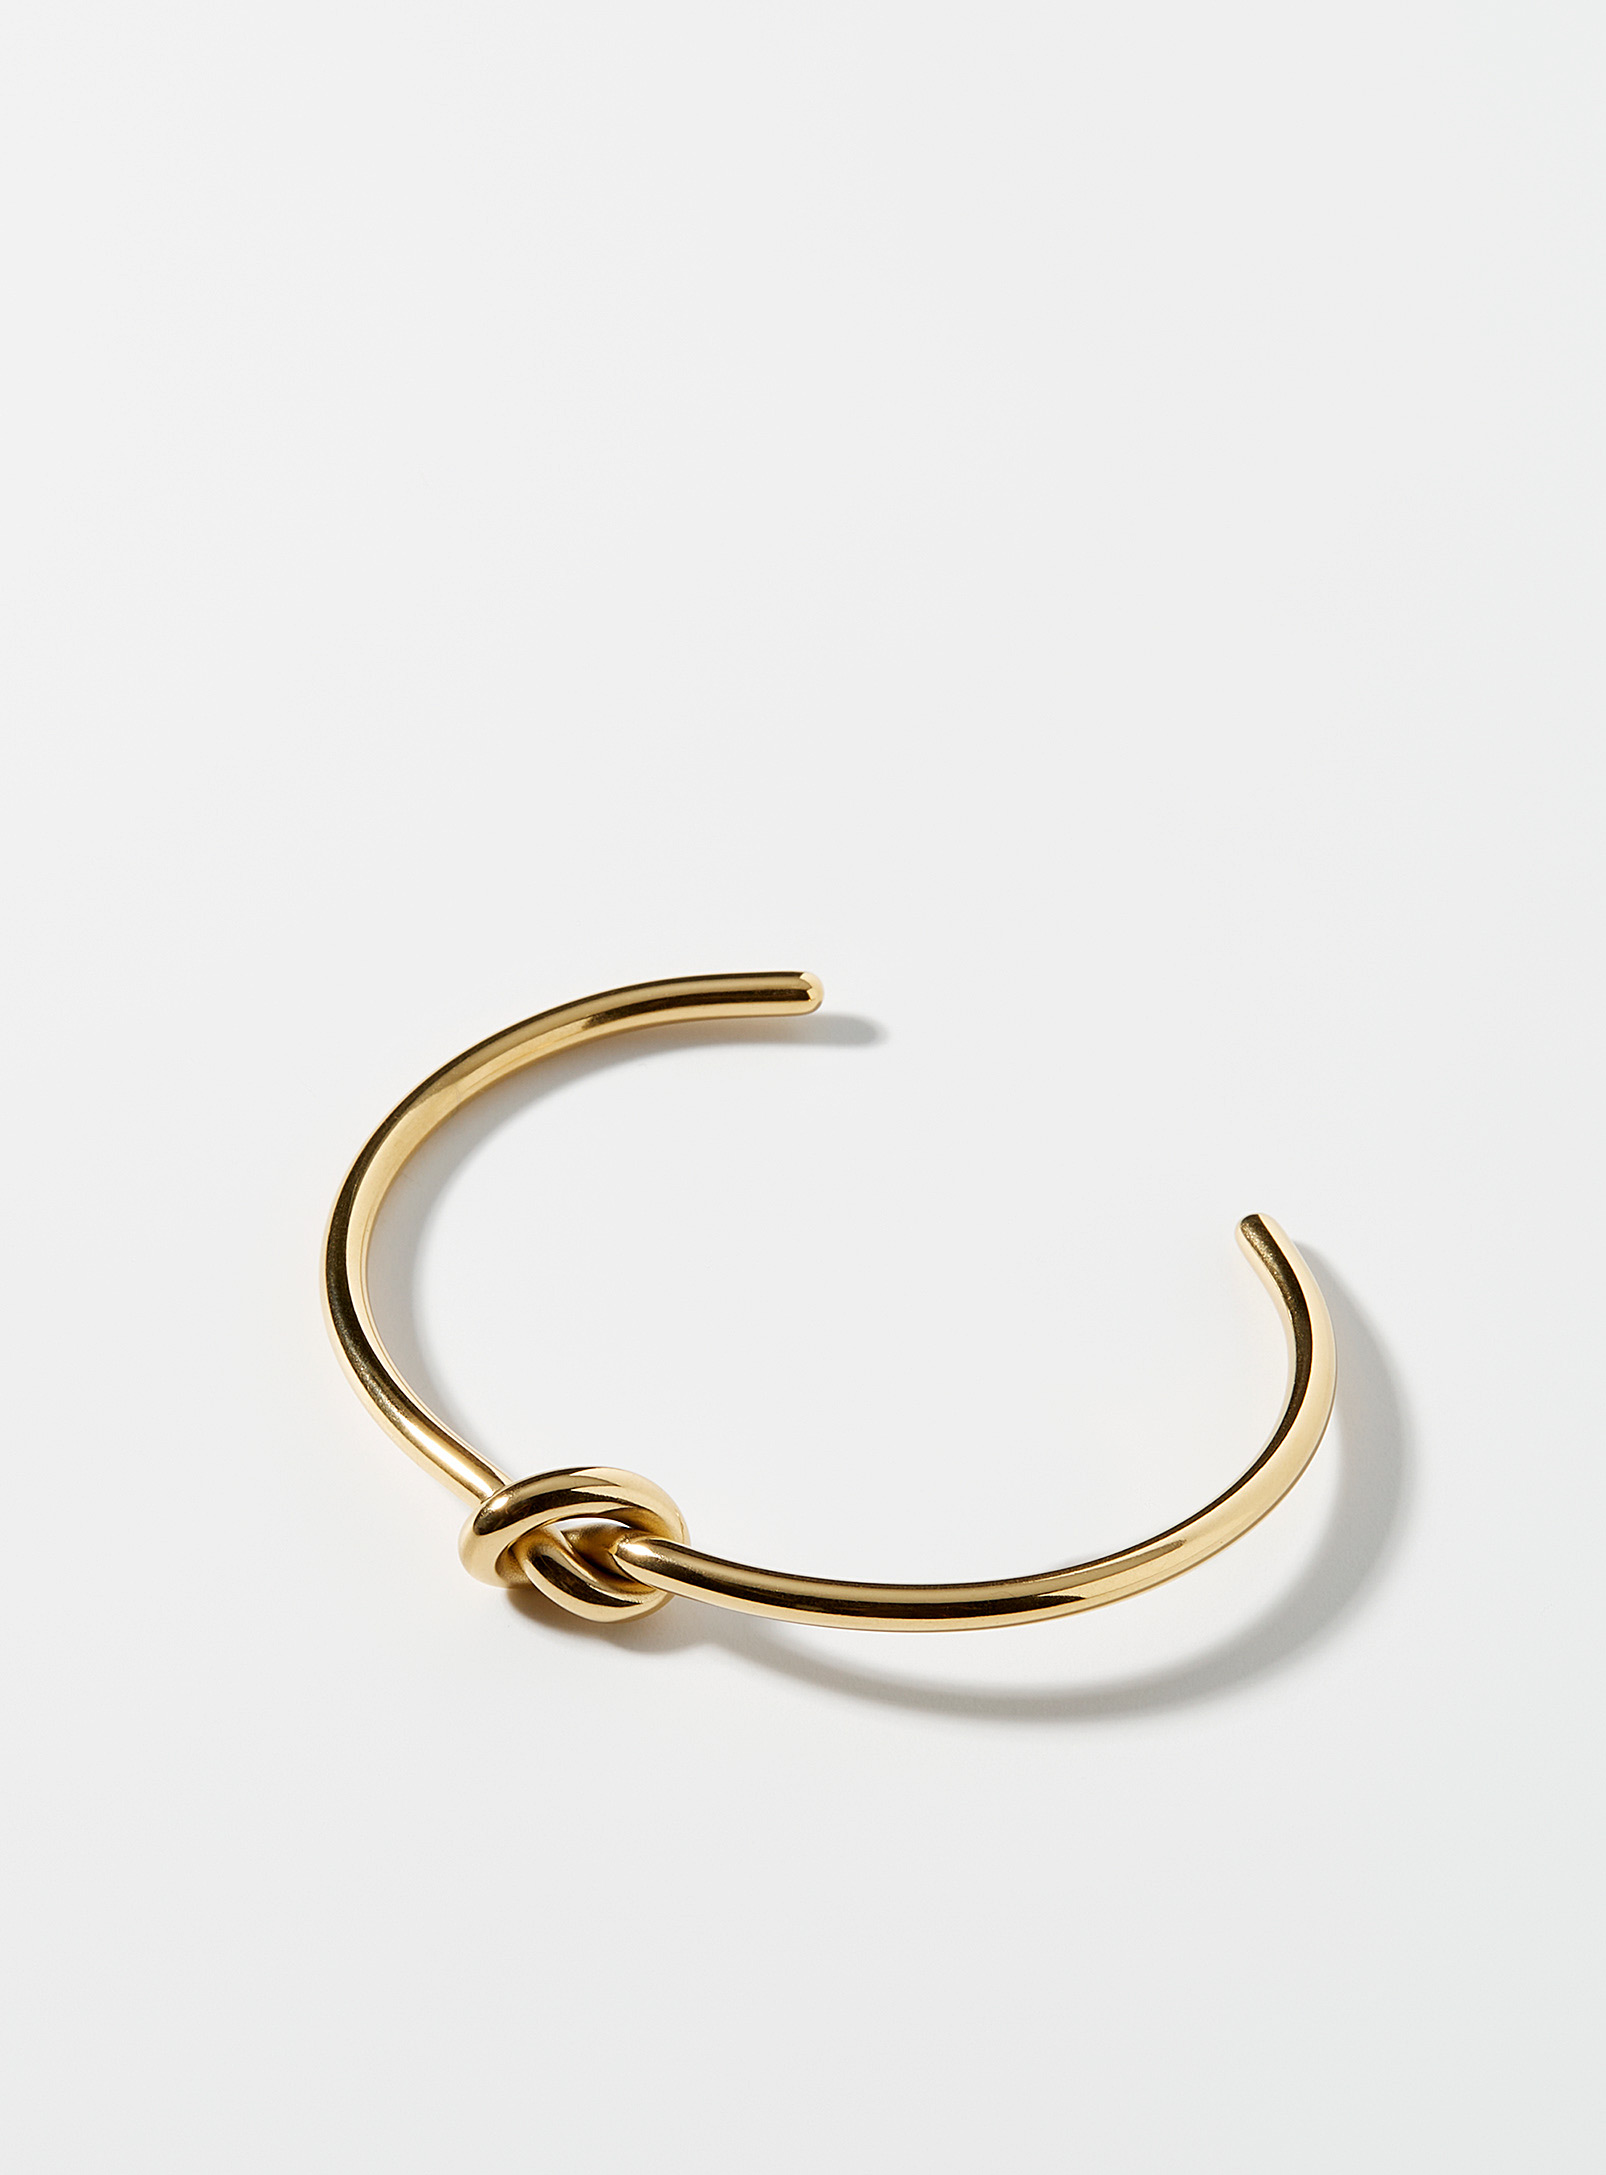 Simons - Women's Knotted cuff bracelet